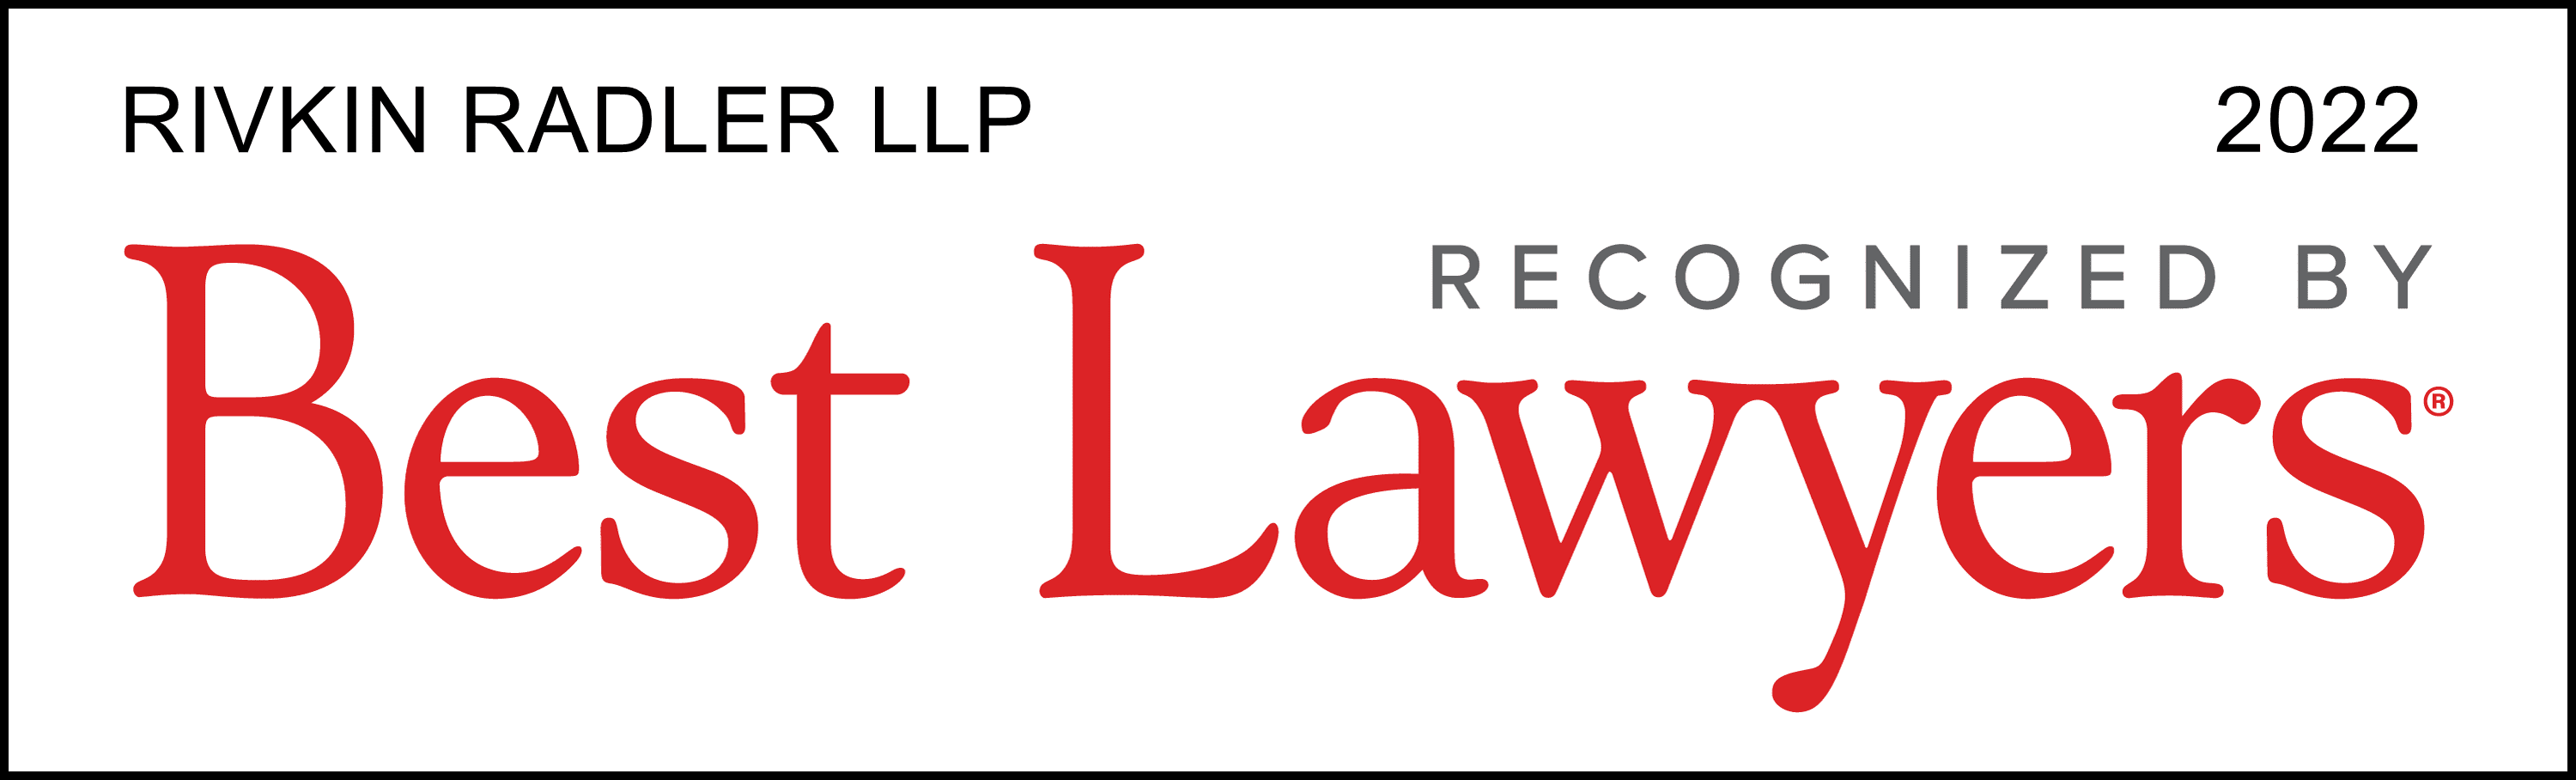 Best Lawyers Firm Logo 2022